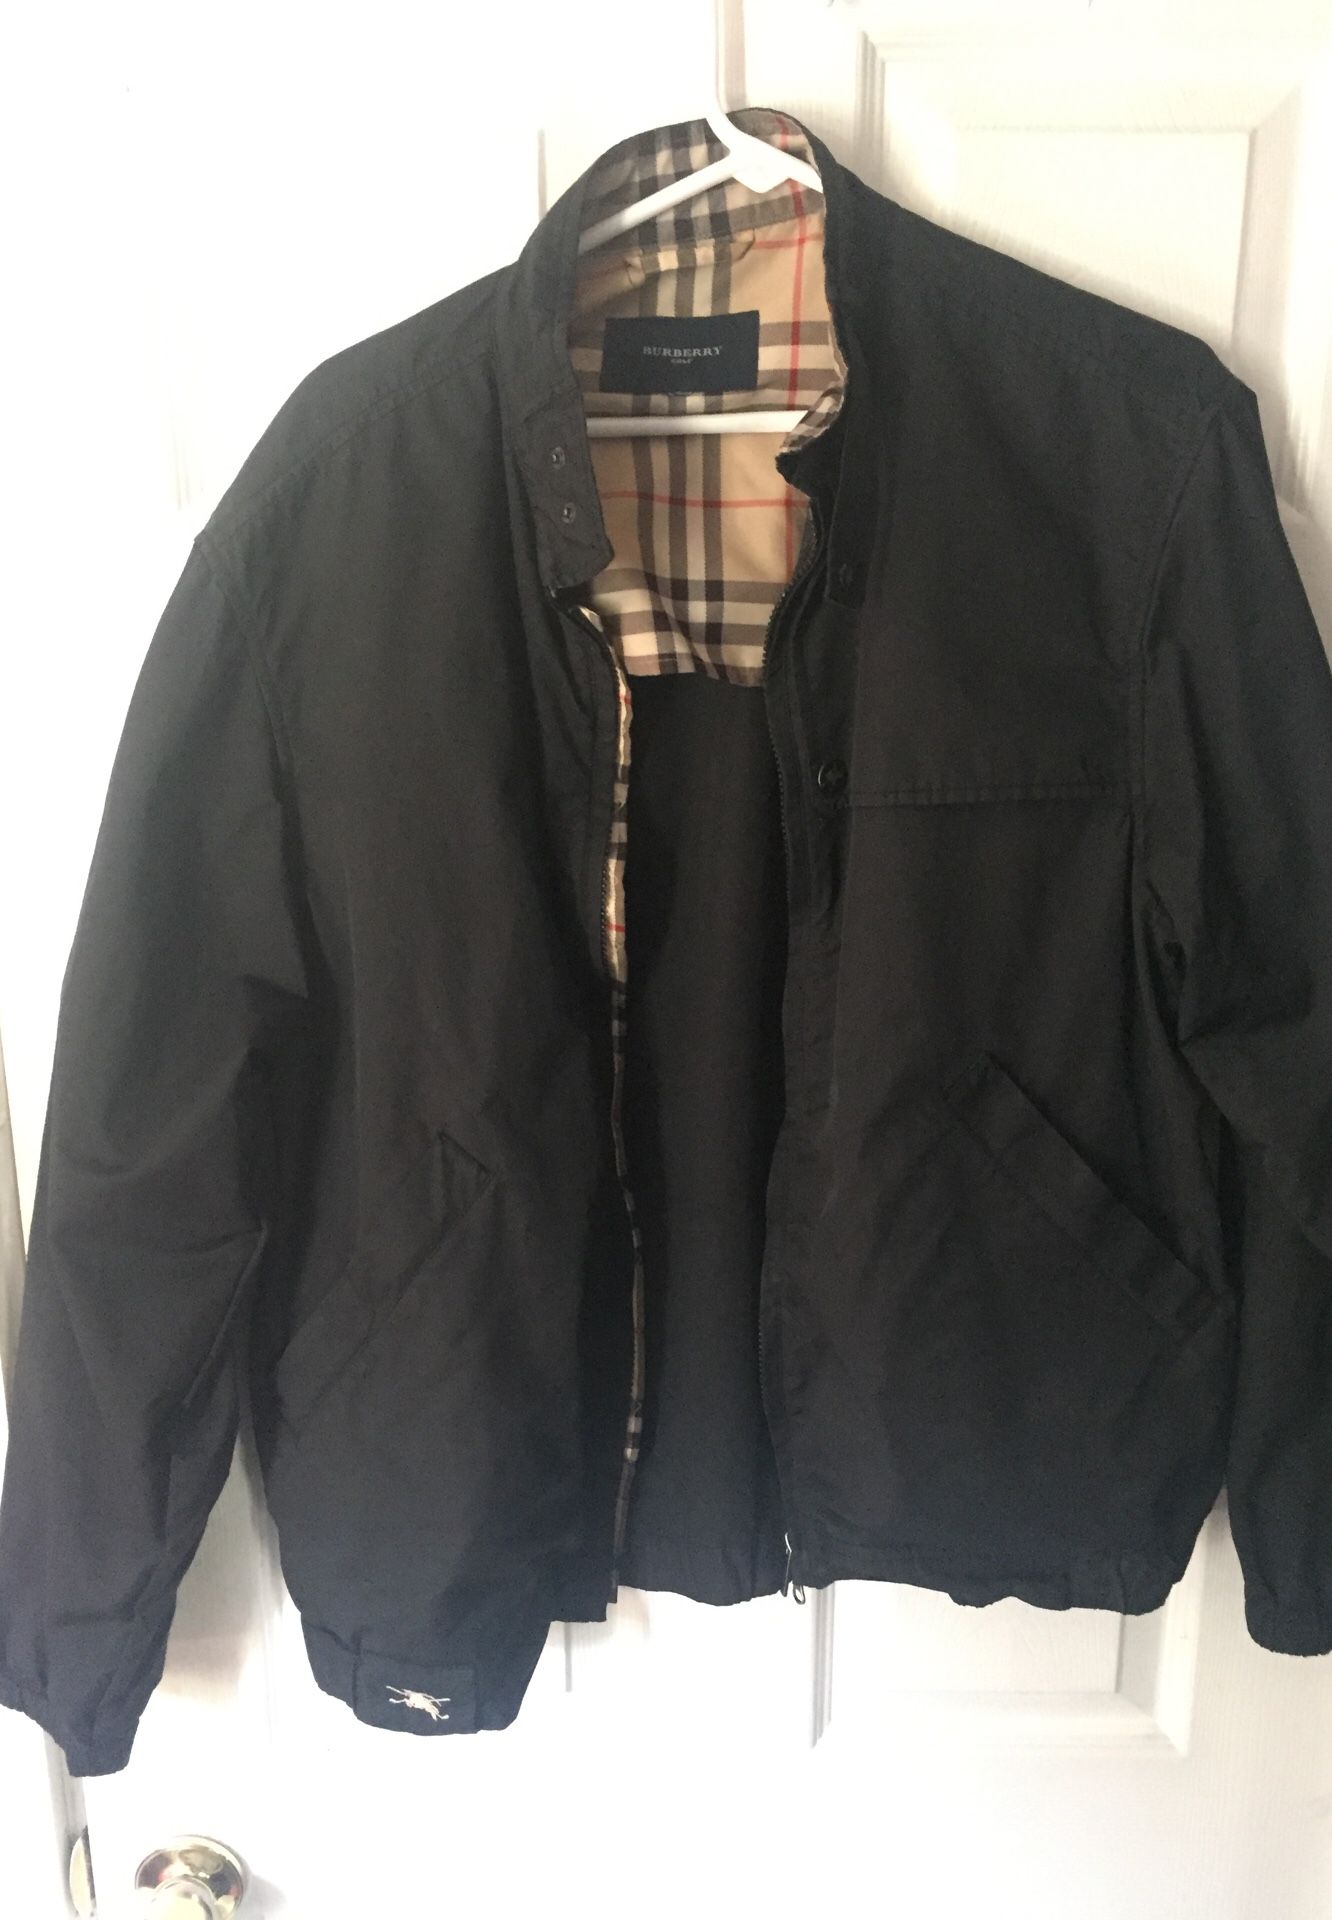 Lg Men’s Burberrry vintage winter jacket